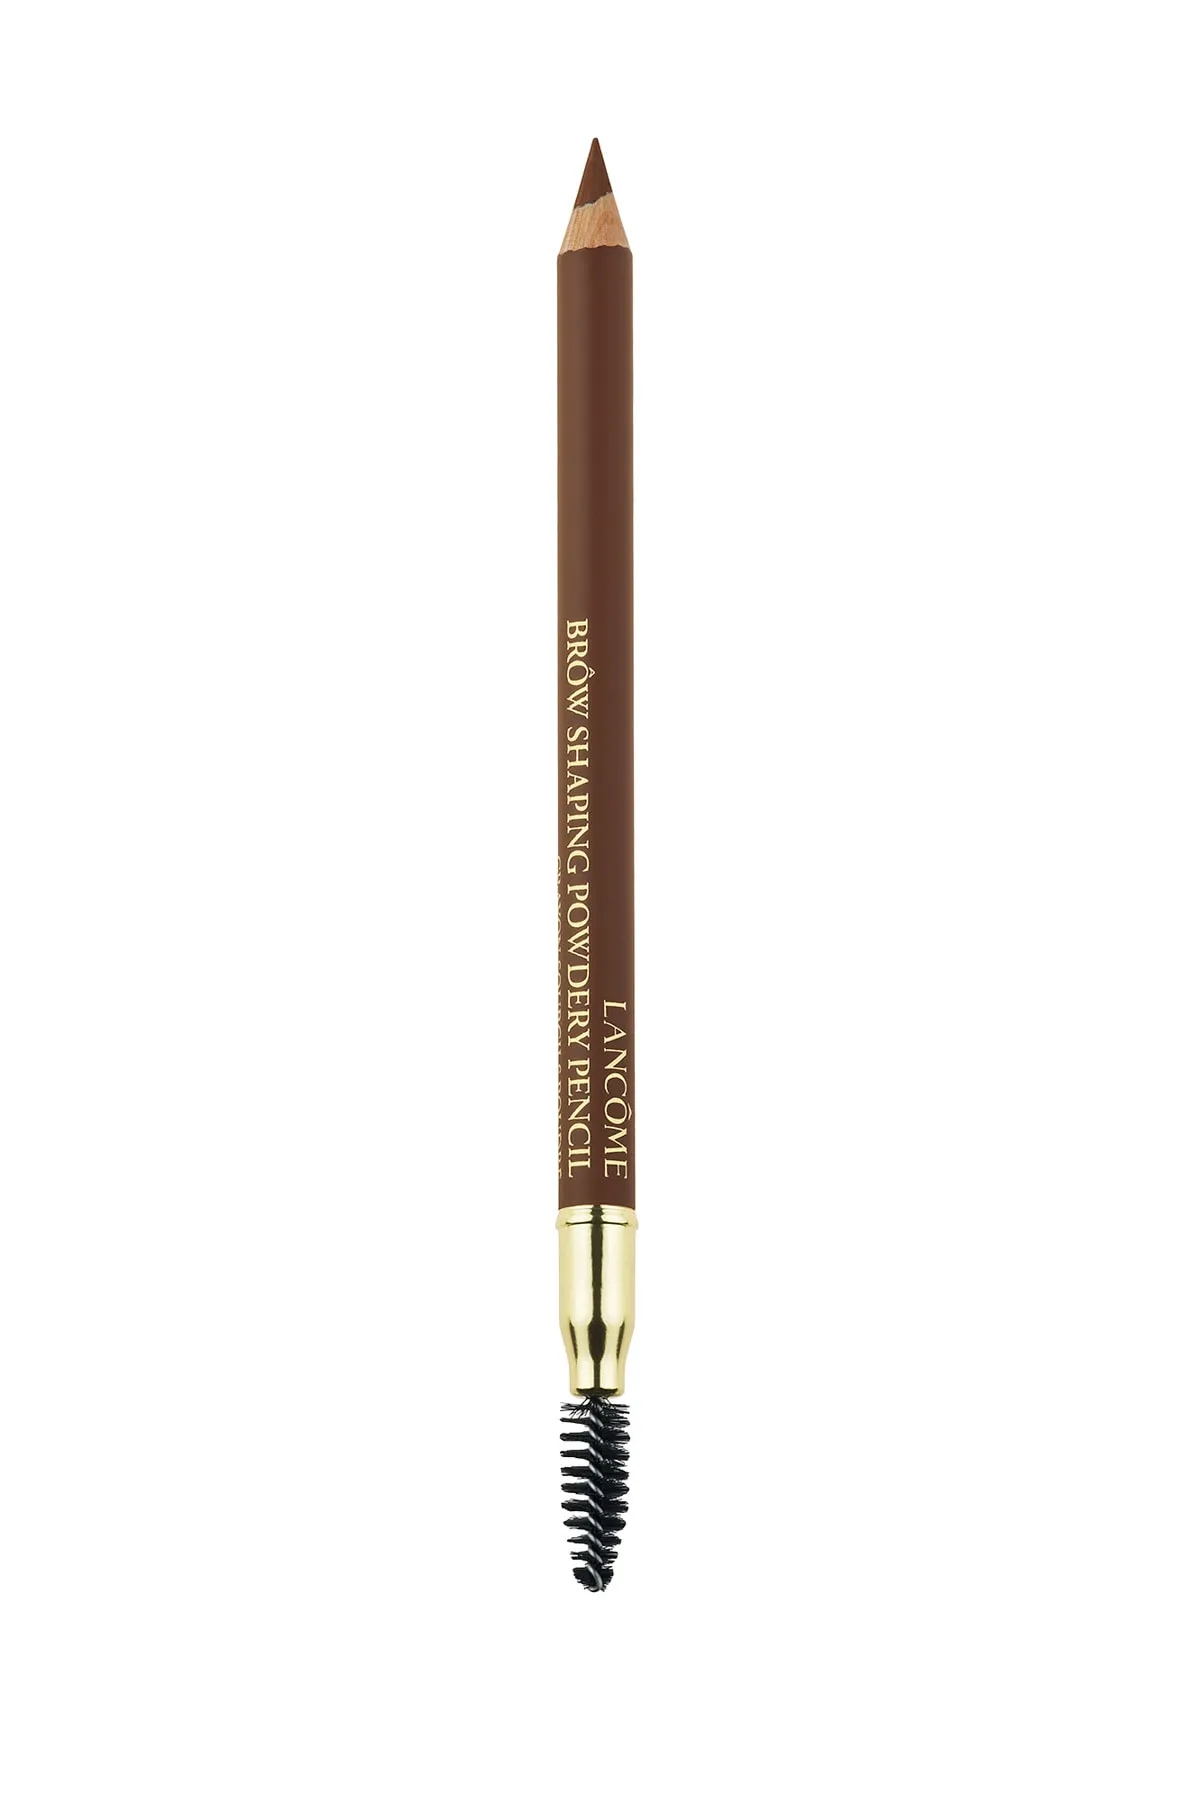 Lancome - Lancome Brow Shaping Powdery Pencil Kaş Kalemi 05 Chetsnut